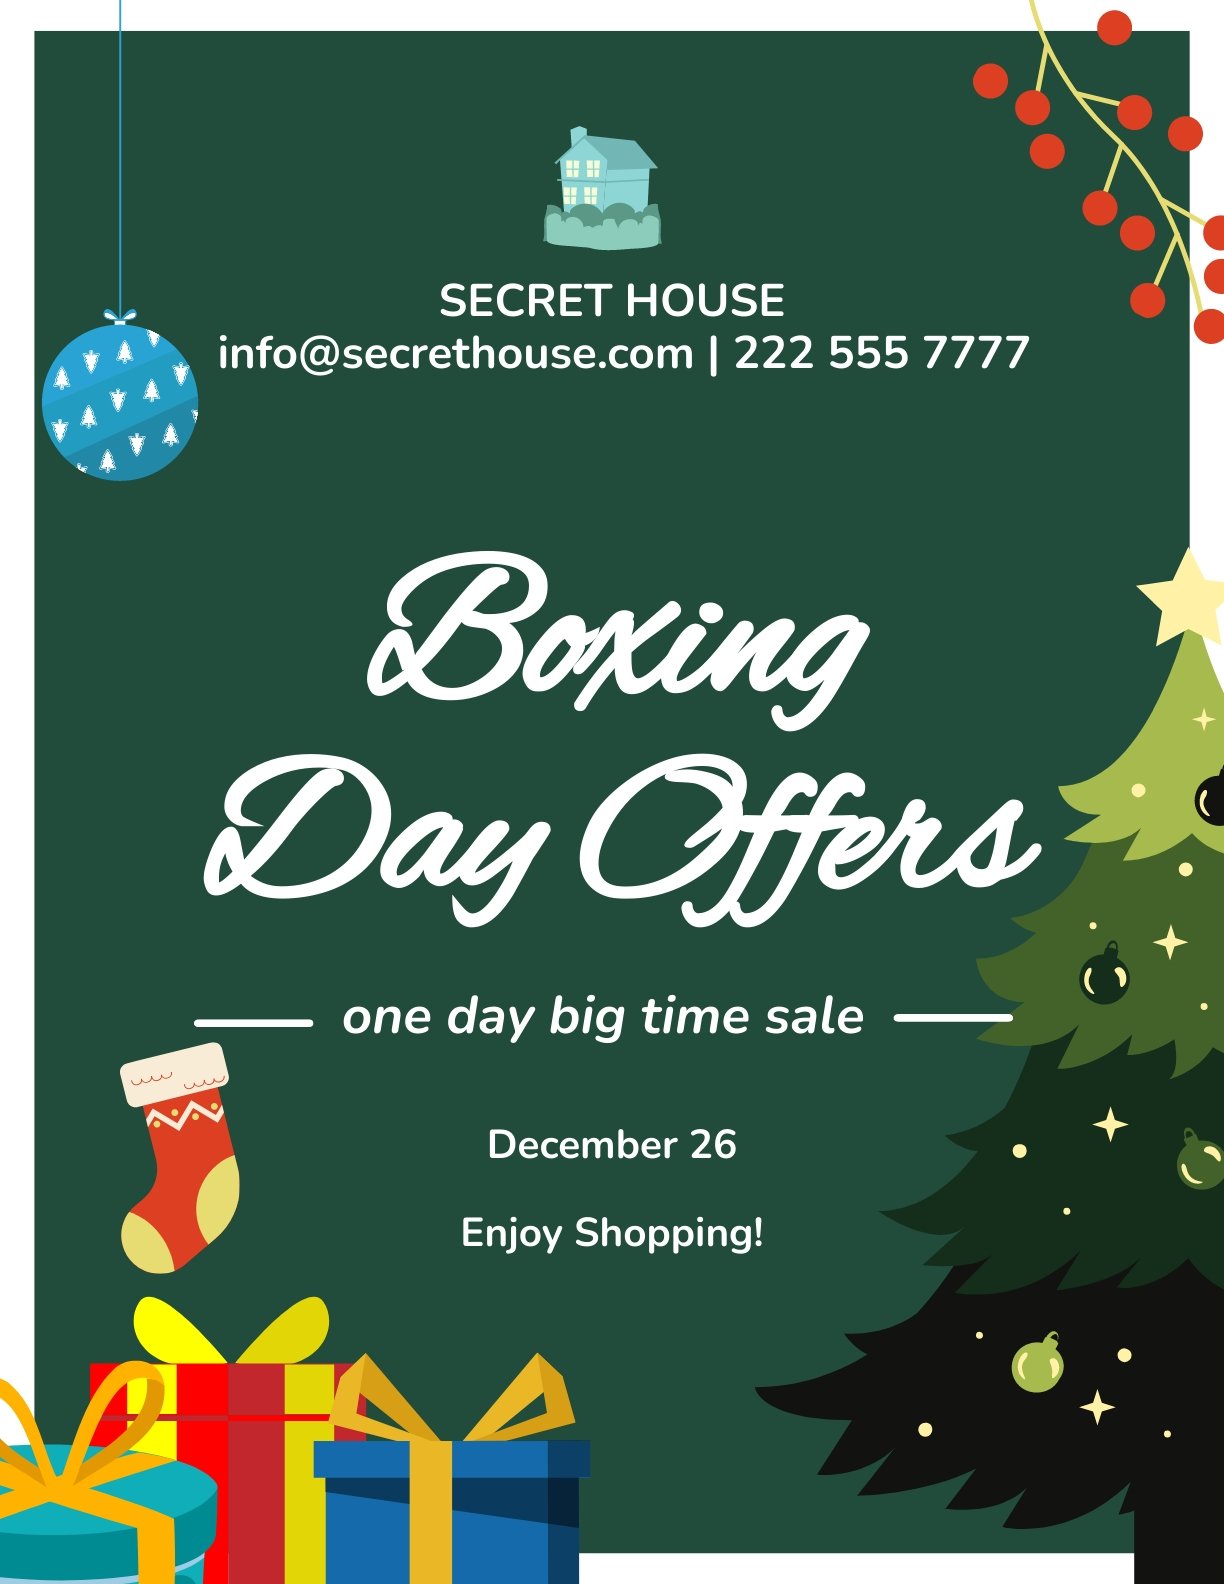 Free Sale Boxing Day Flyer in Word, Google Docs, Illustrator, PSD, EPS, SVG, JPG, PNG